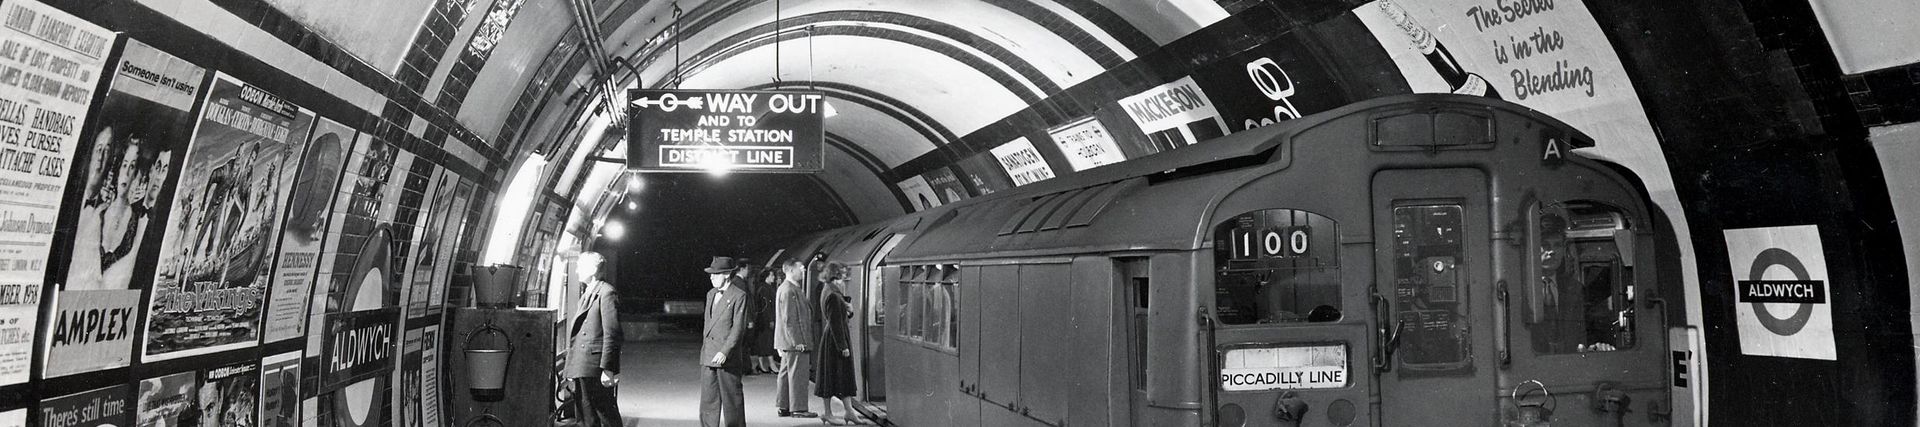 Aldwych station platform, 1958